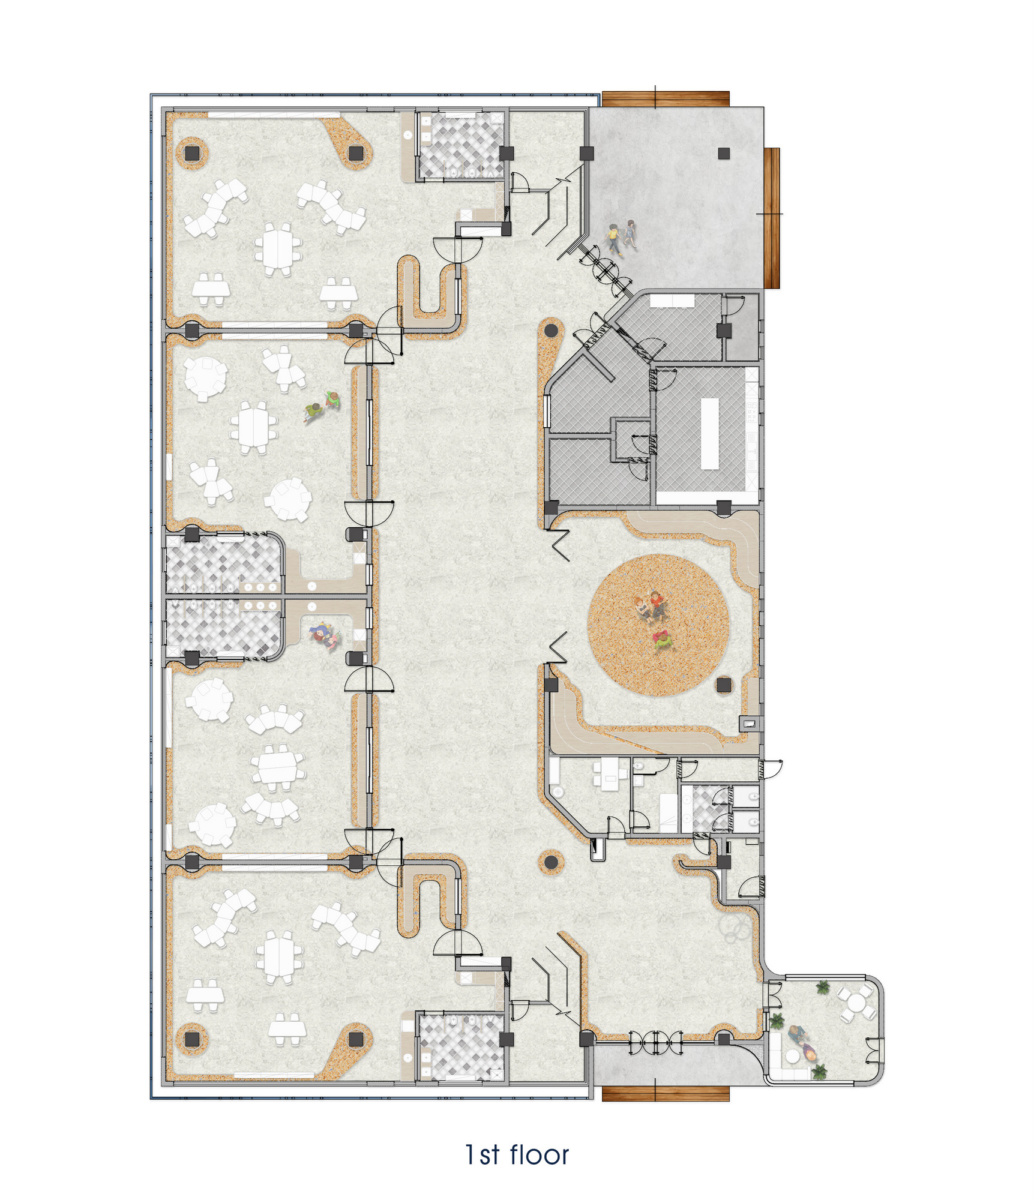 montessori classroom floor plan